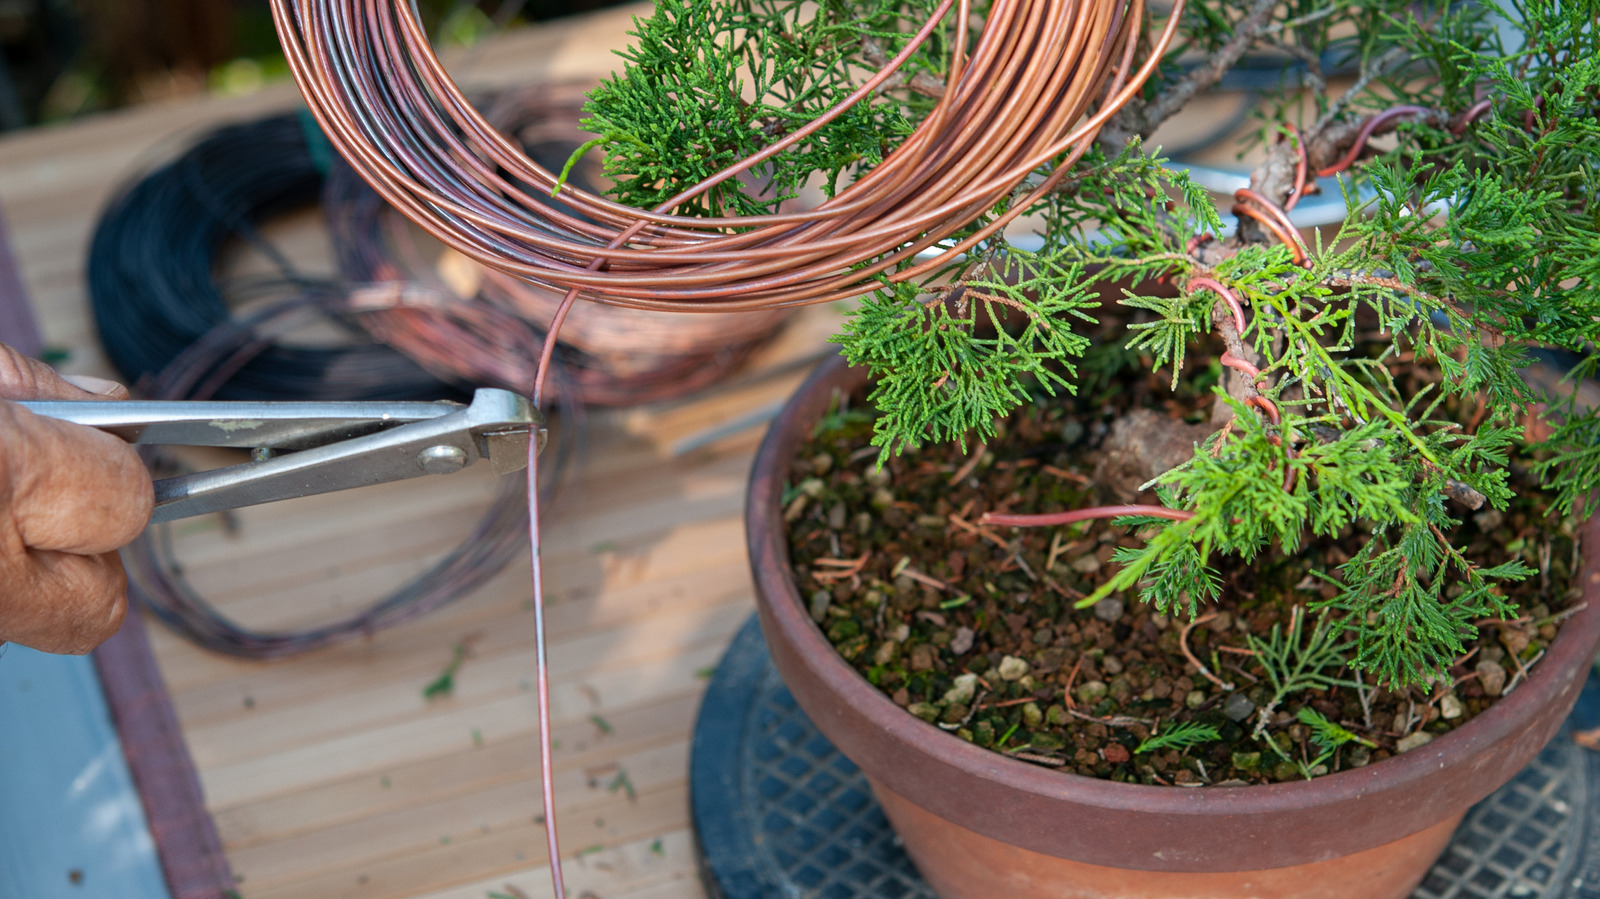 Electro Culture Rods for Plants, Copper Electroculture Garden